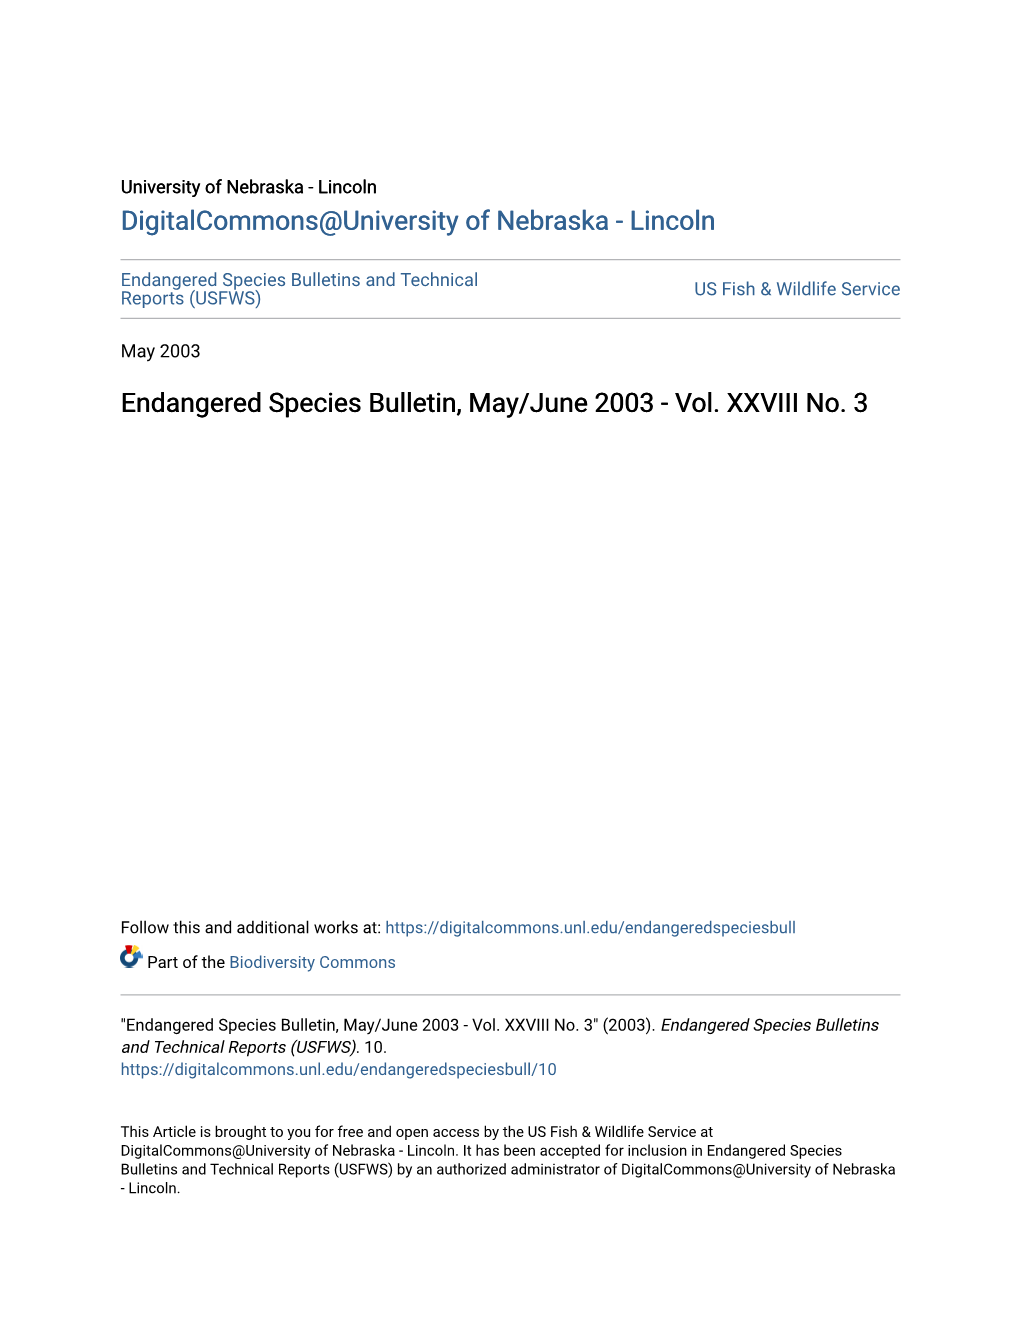 Endangered Species Bulletin, May/June 2003 - Vol